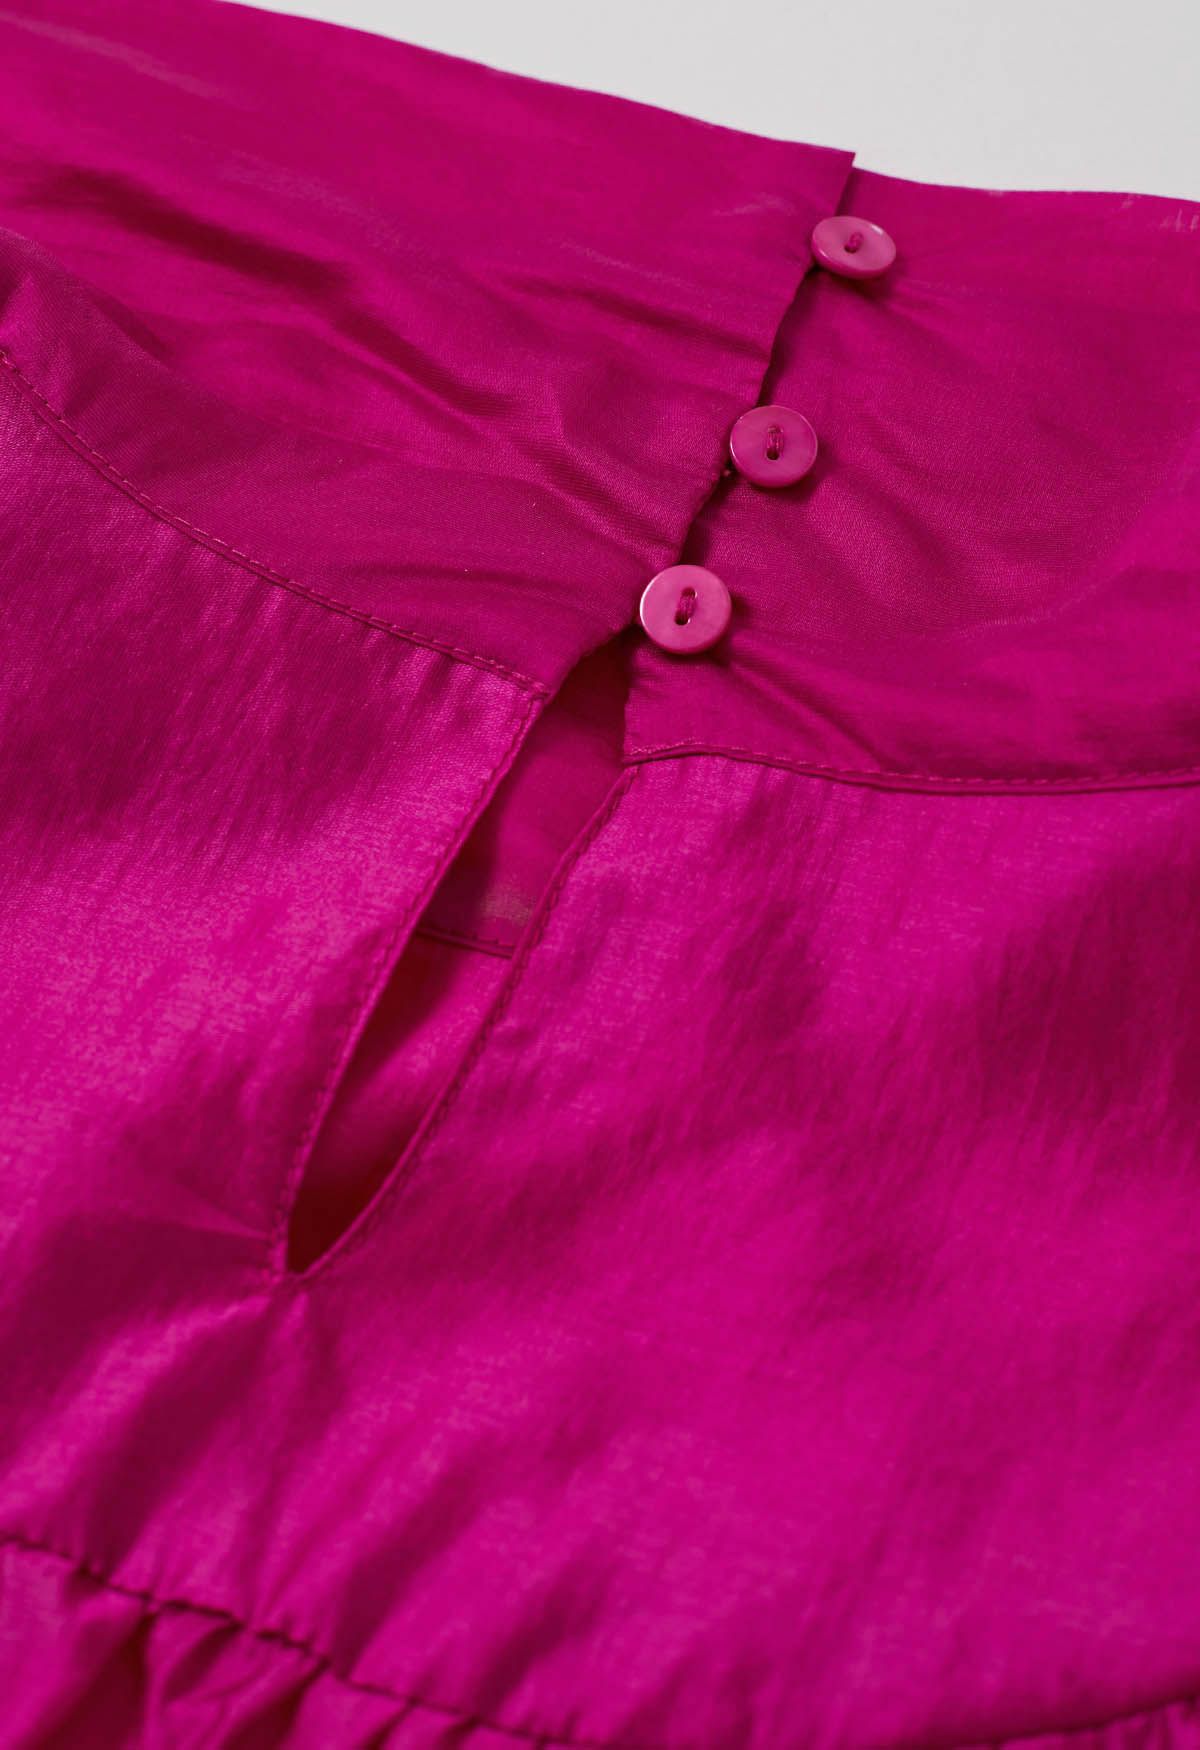 Charming Bowknot Puff Sleeve Sheer Shirt in Hot Pink